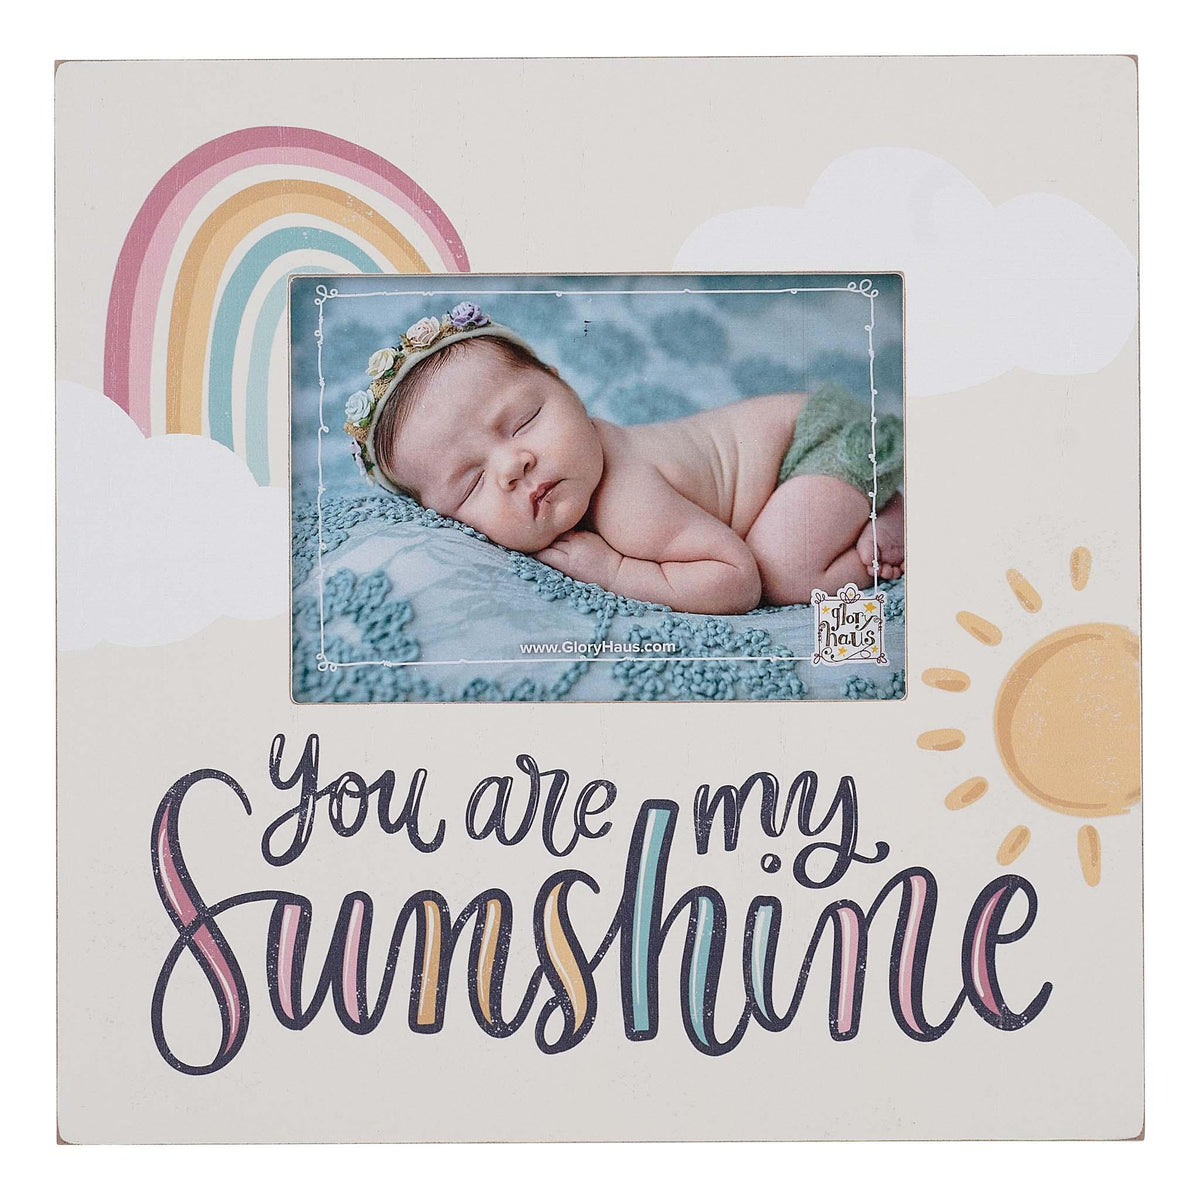 You Are My Sunshine, My Lovely Sunshine Photo Frame